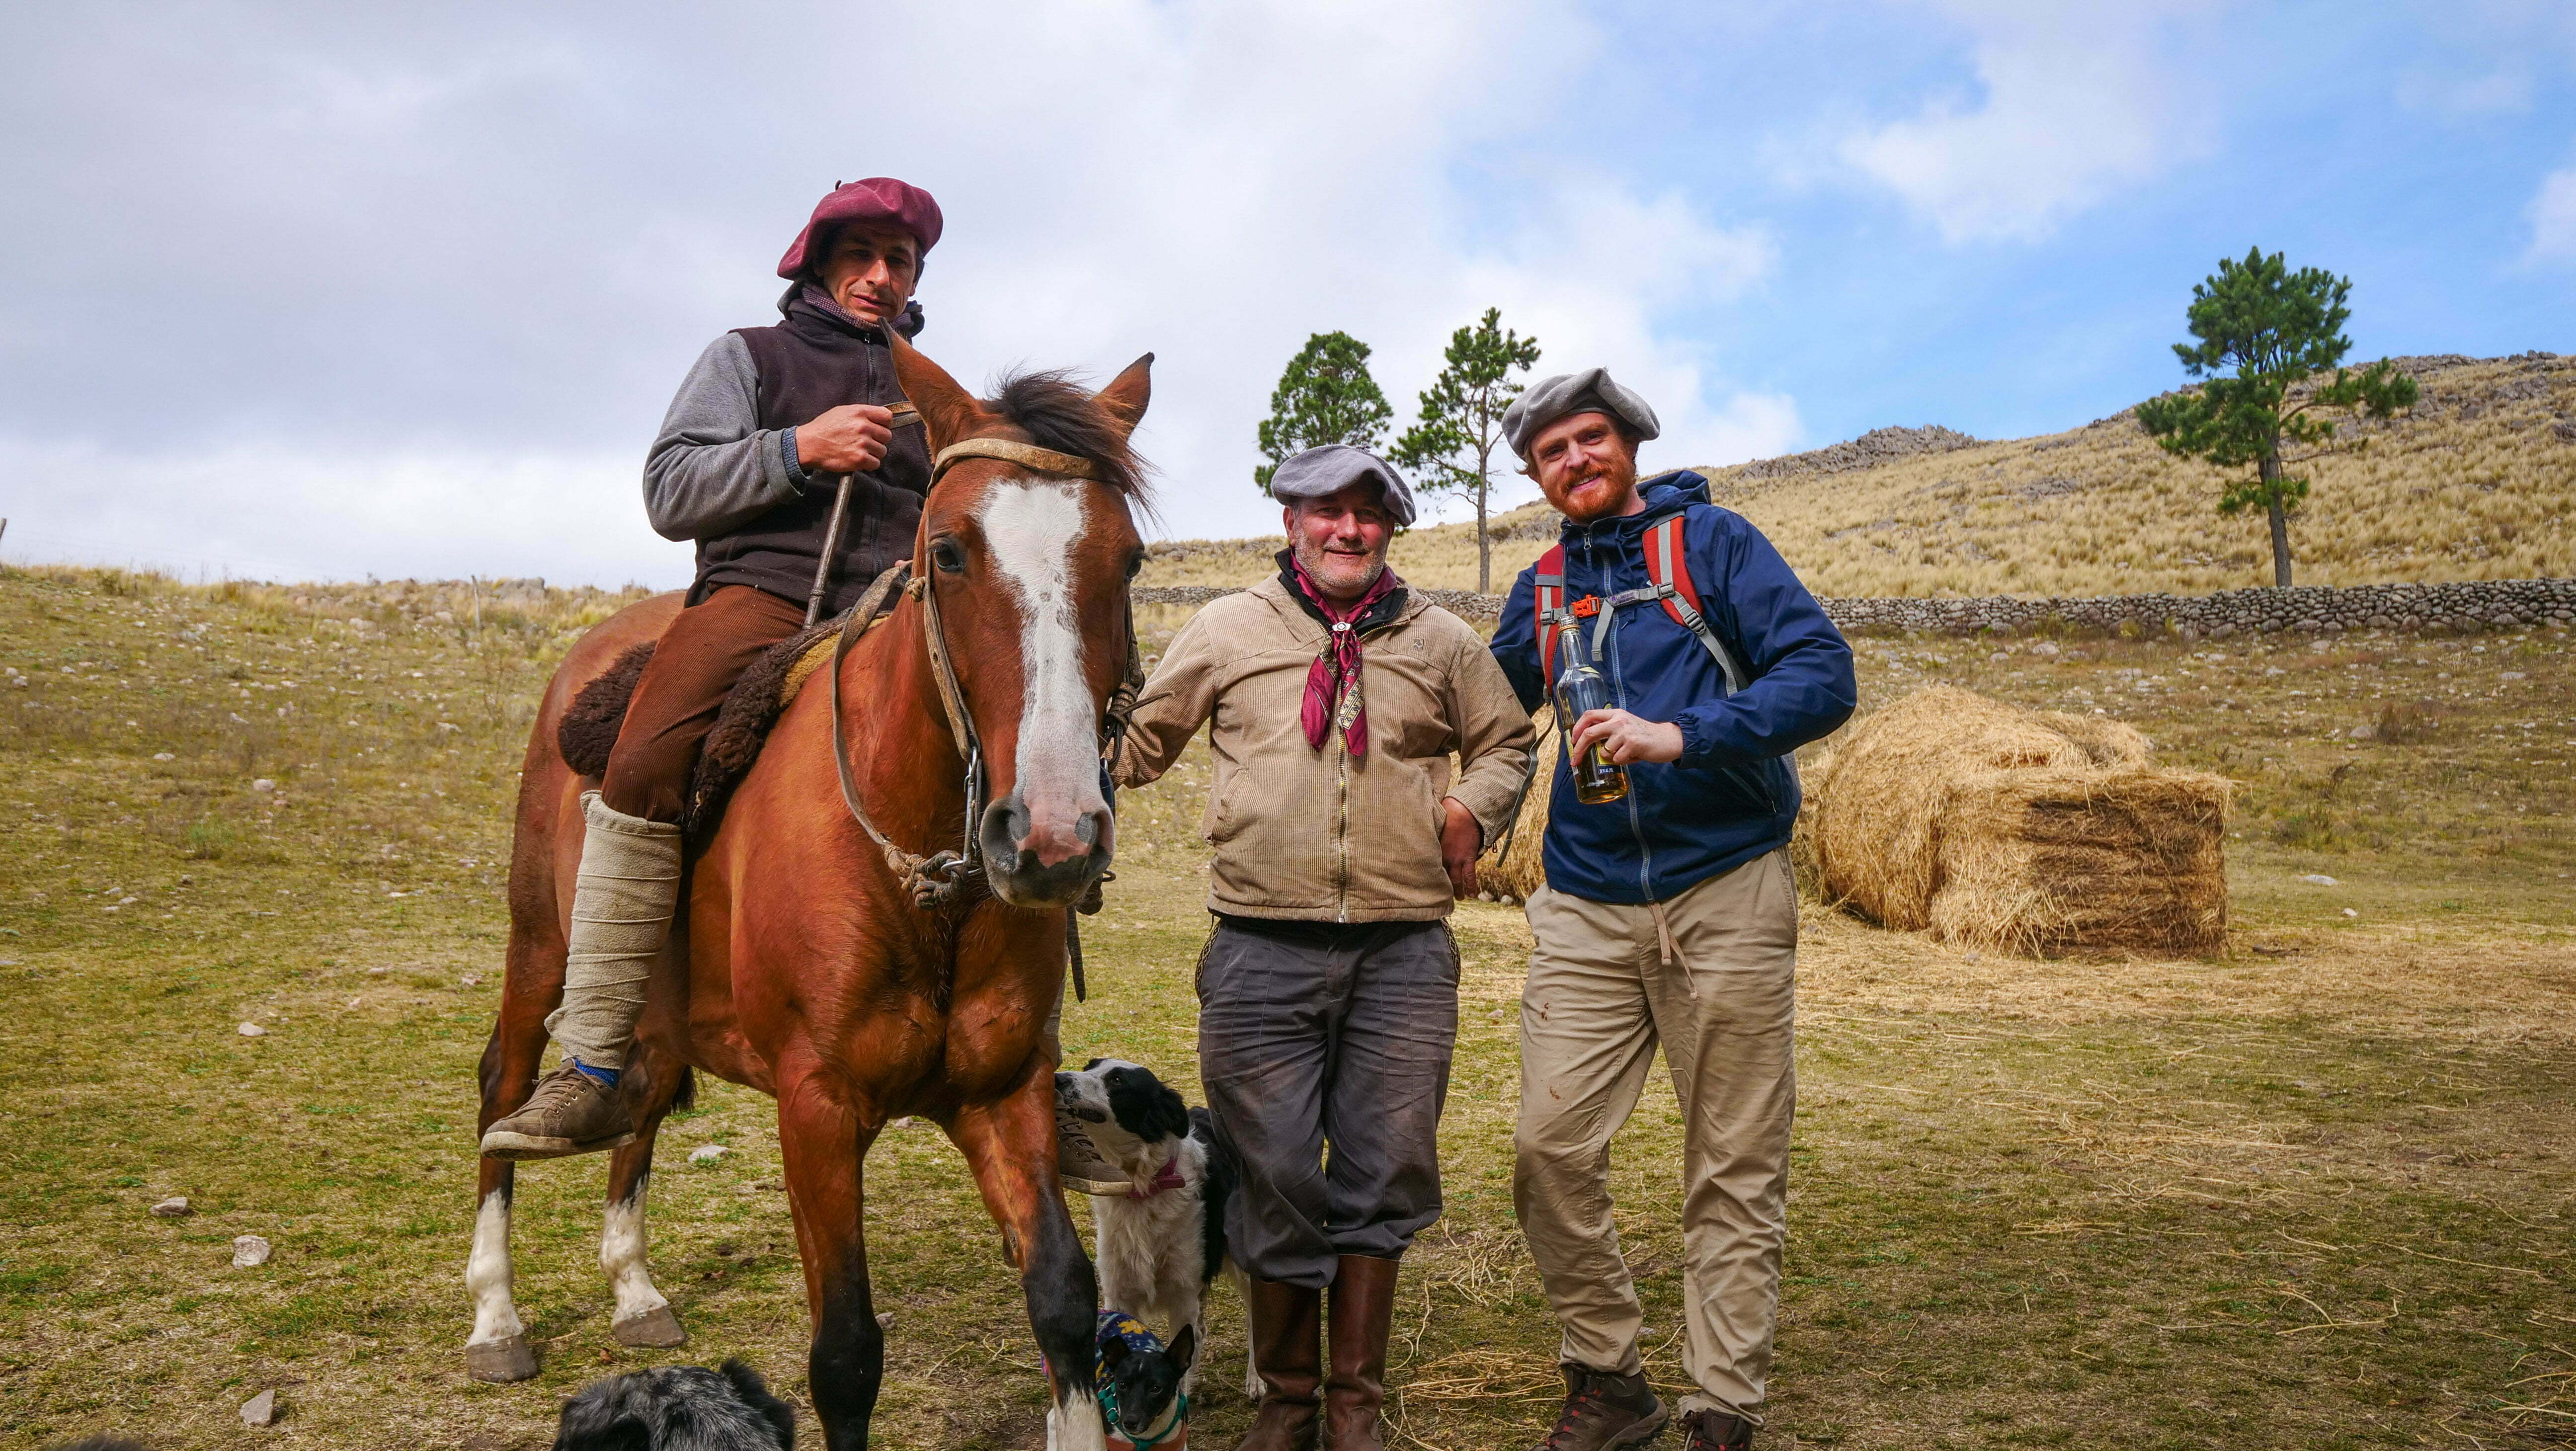 Nomadic Samuel traveling in Argentina (an Emerging Market destination) by horseback with gauchos